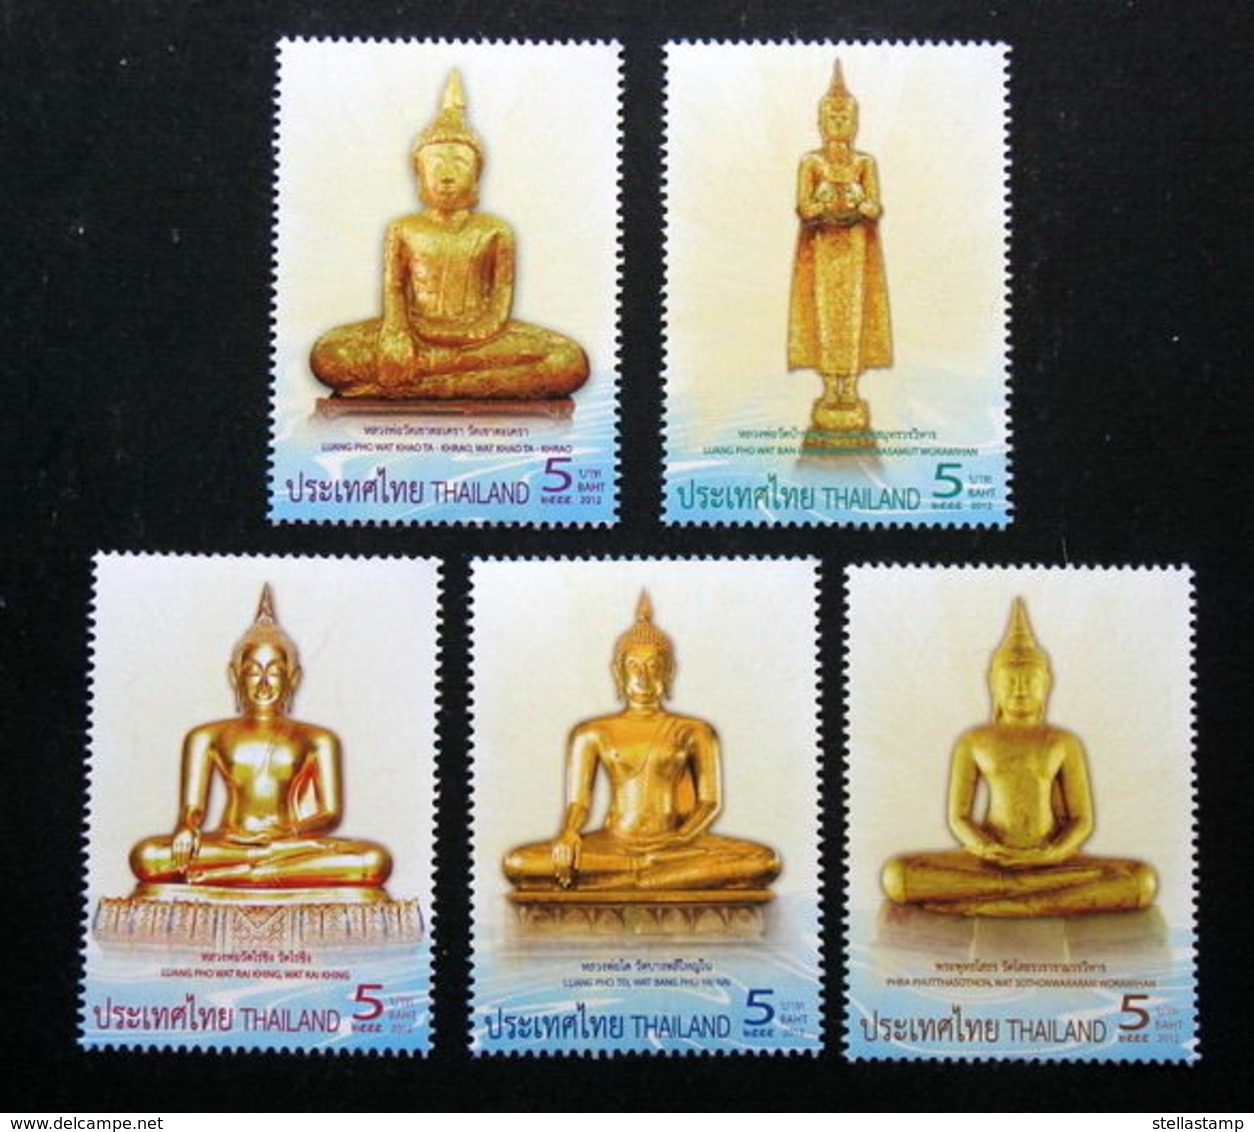 Thailand Stamp 2012 Set Of Five Highly Revered Floating Buddha Image - Thailand